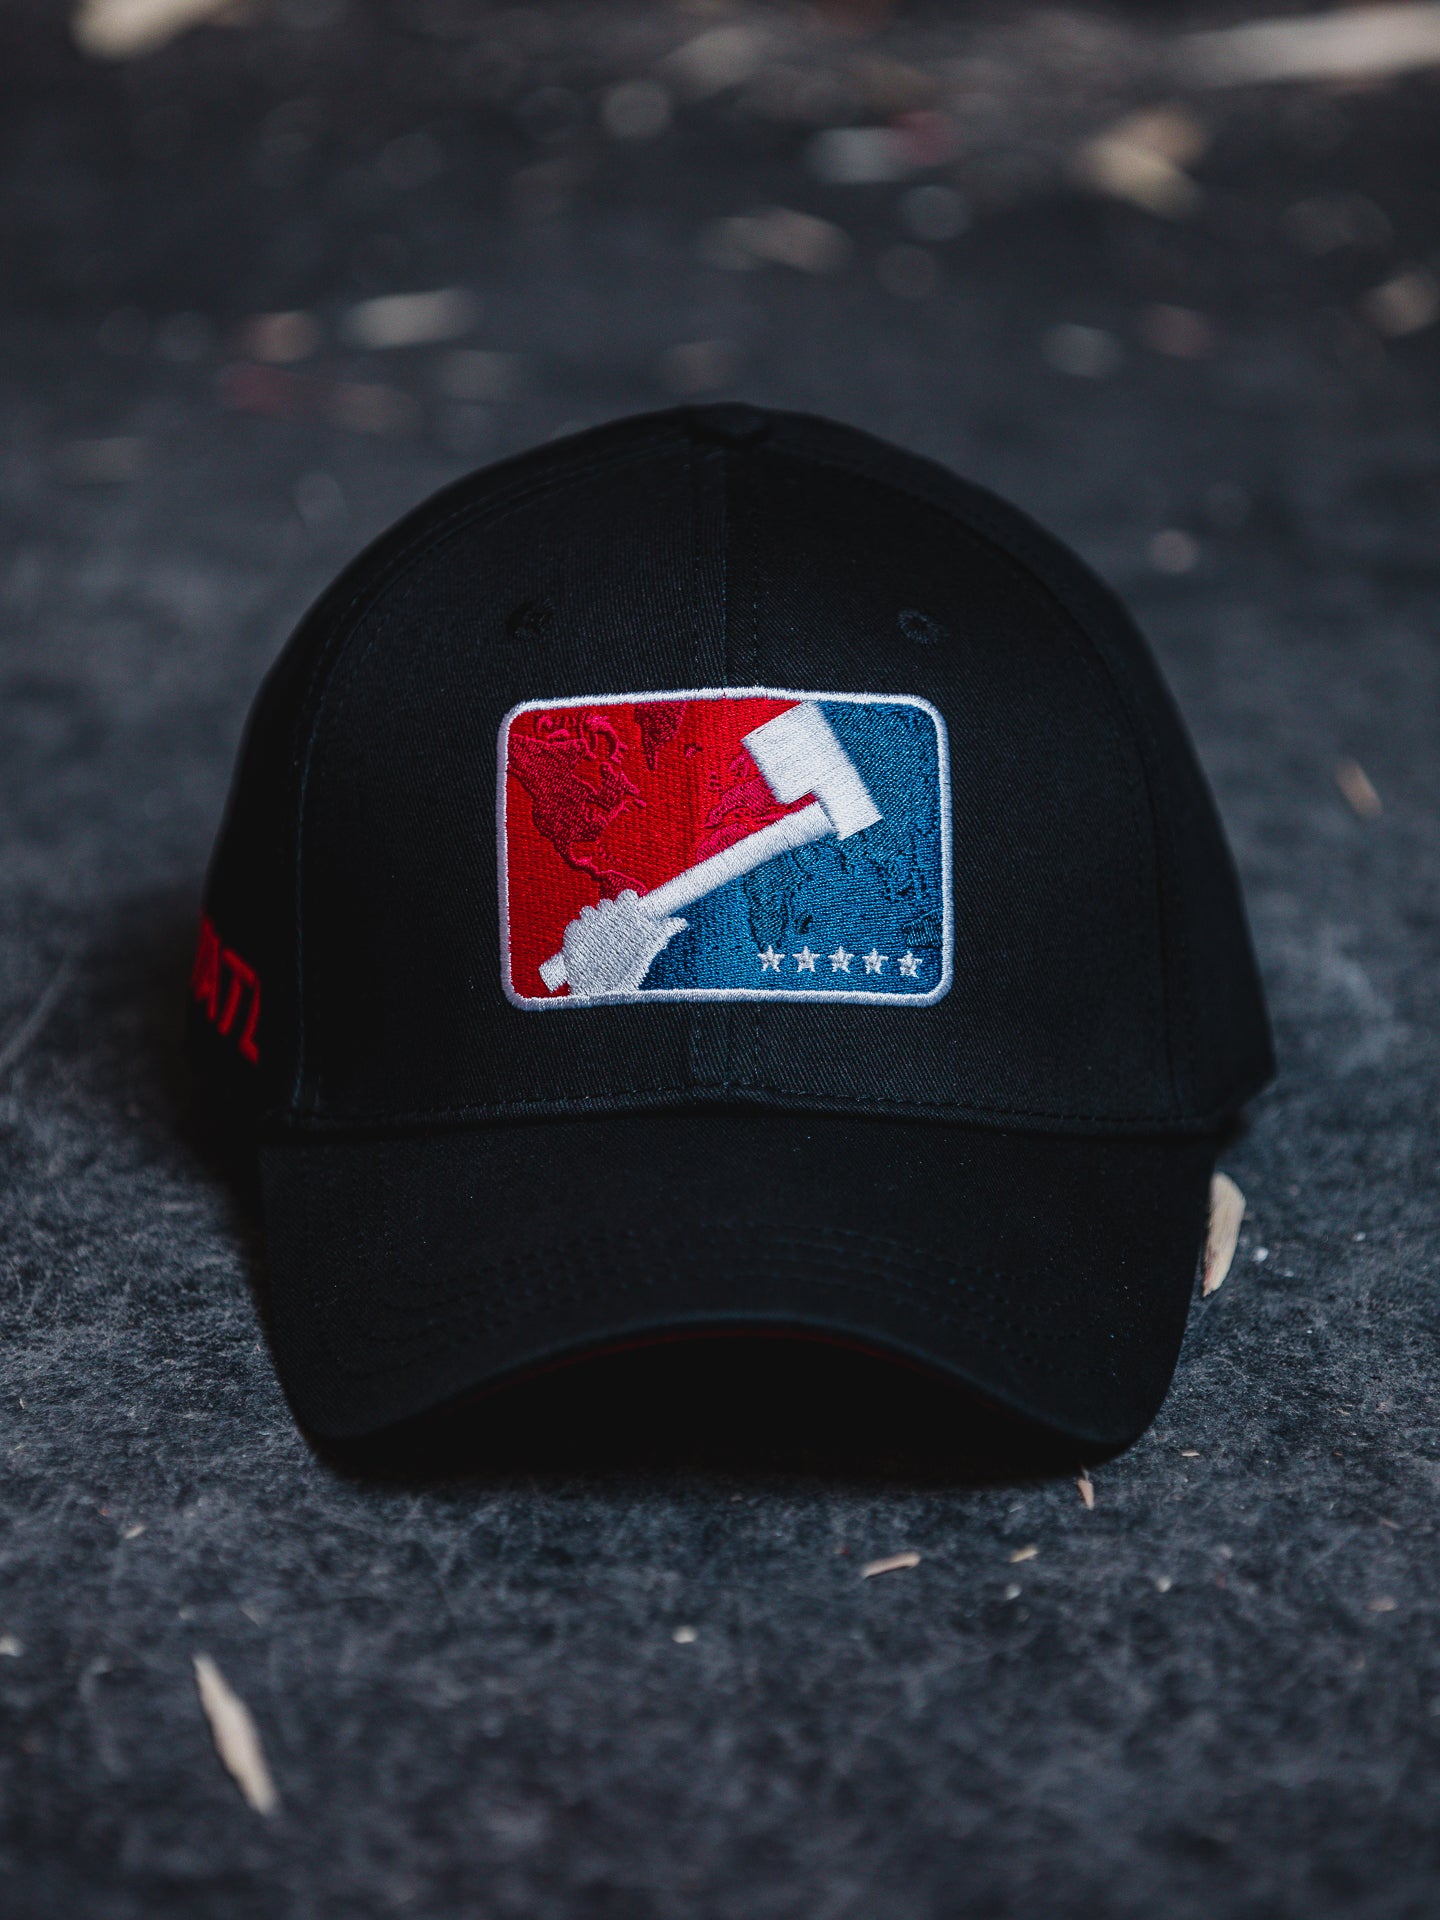 World Axe Throwing League Baseball cap, hat, clothing, mens, womens, unisex